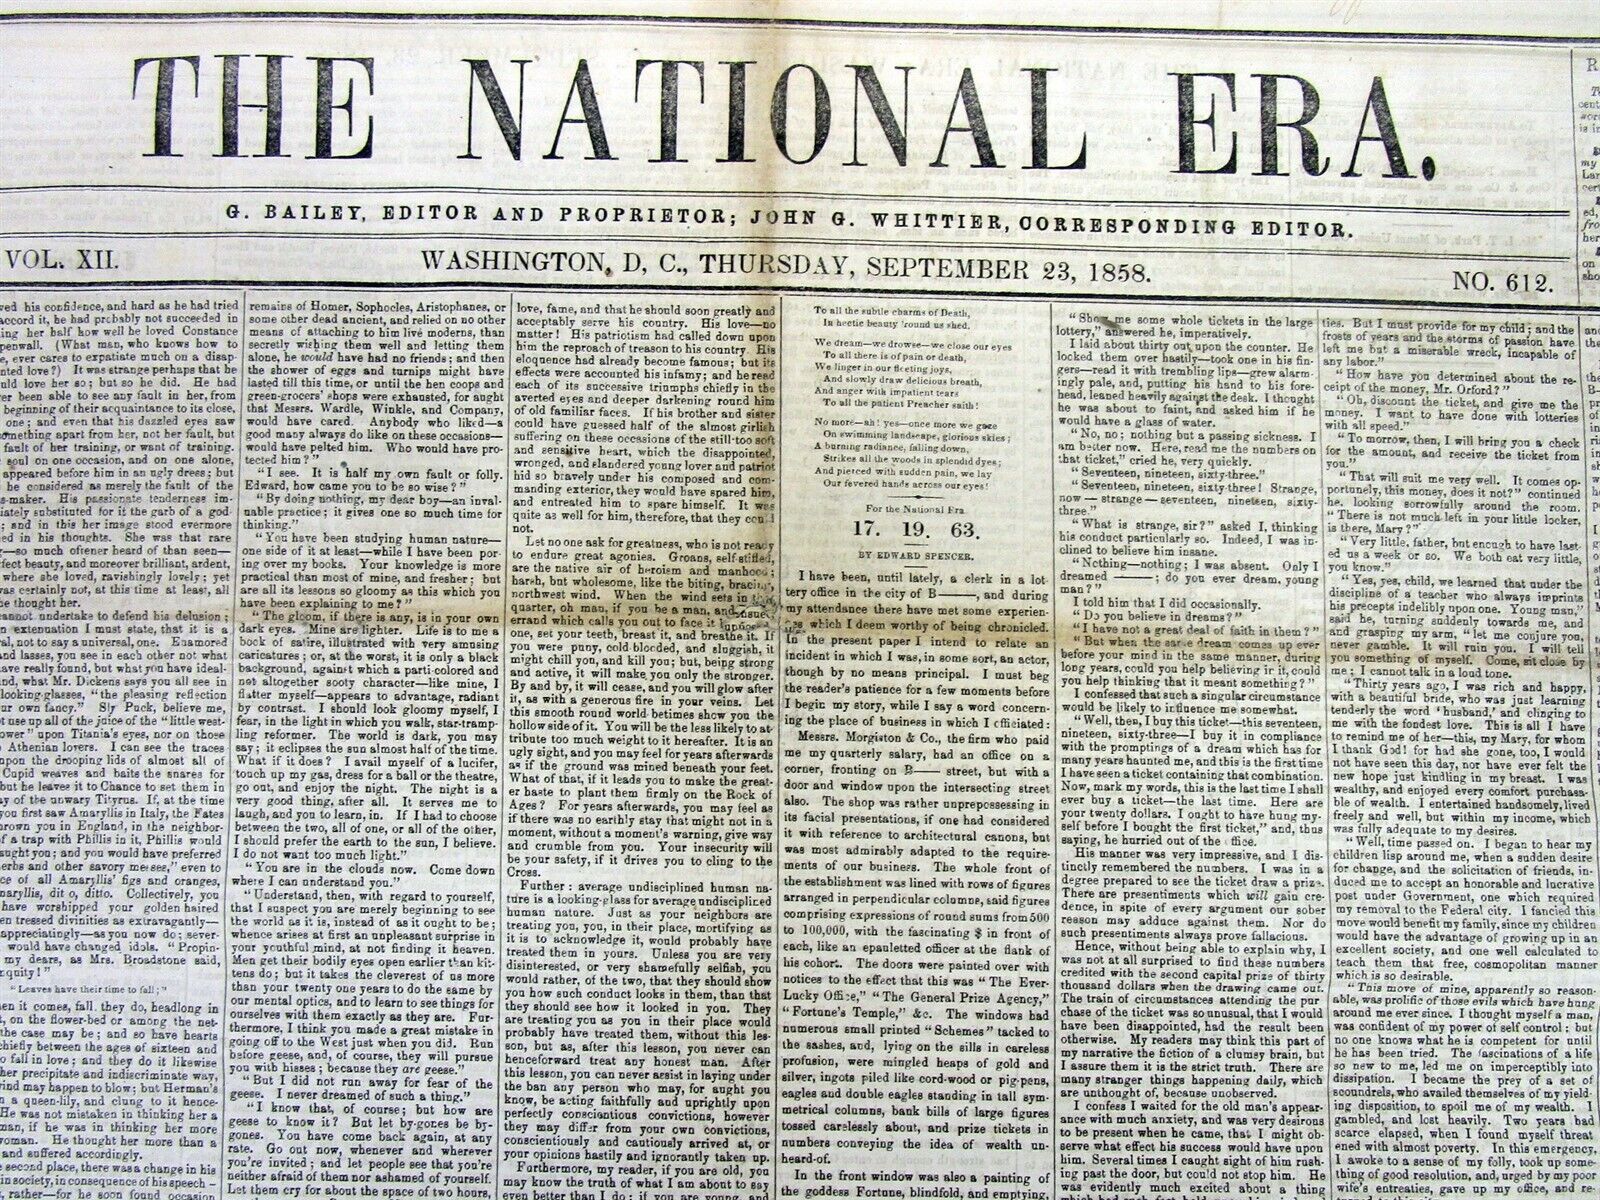 1858 anti-slavery newspaper NATIONAL ERA detailing the HORRORS ofTHE SLAVE TRADE